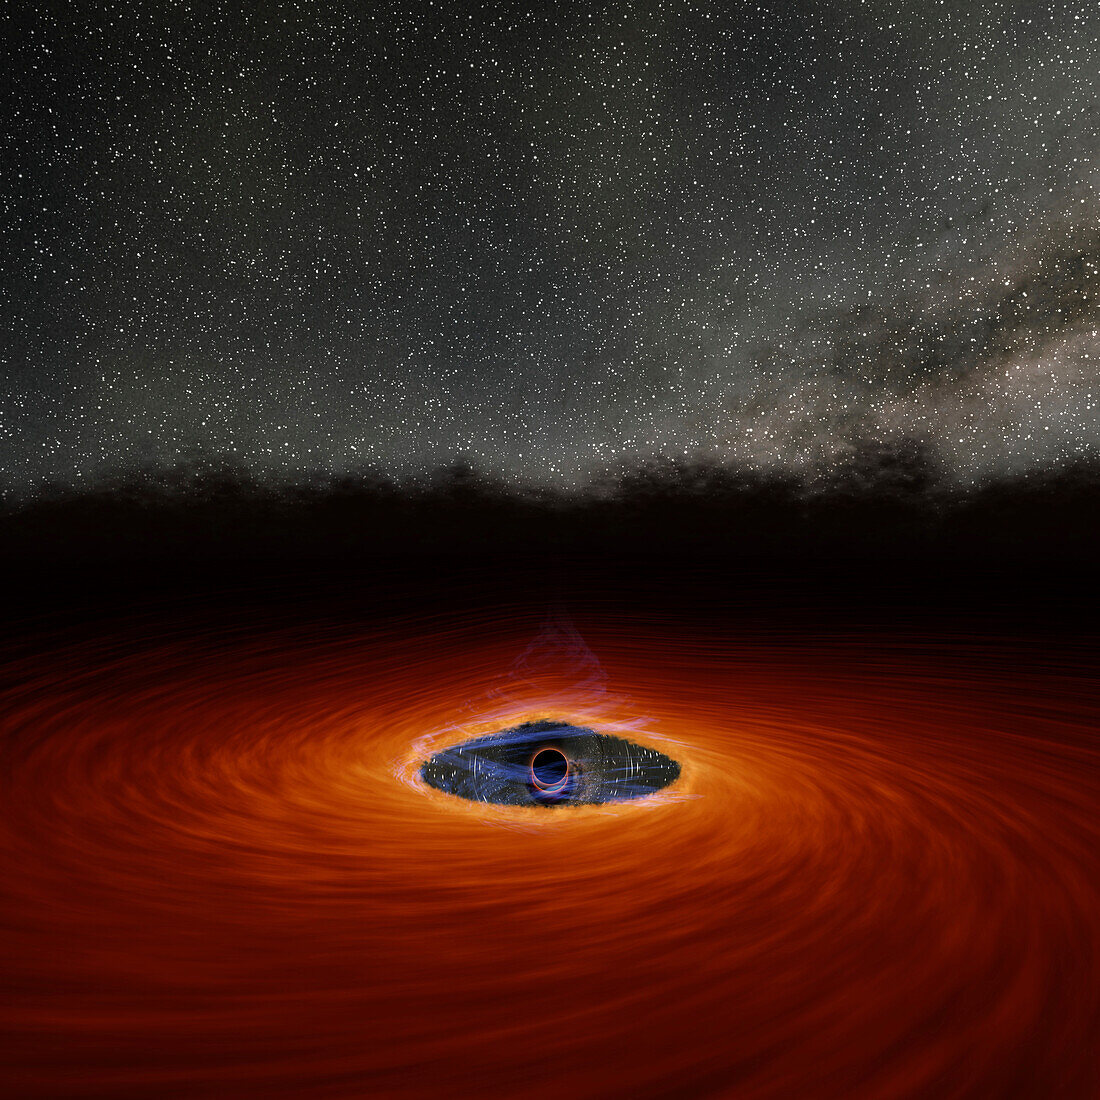 Black hole, illustration